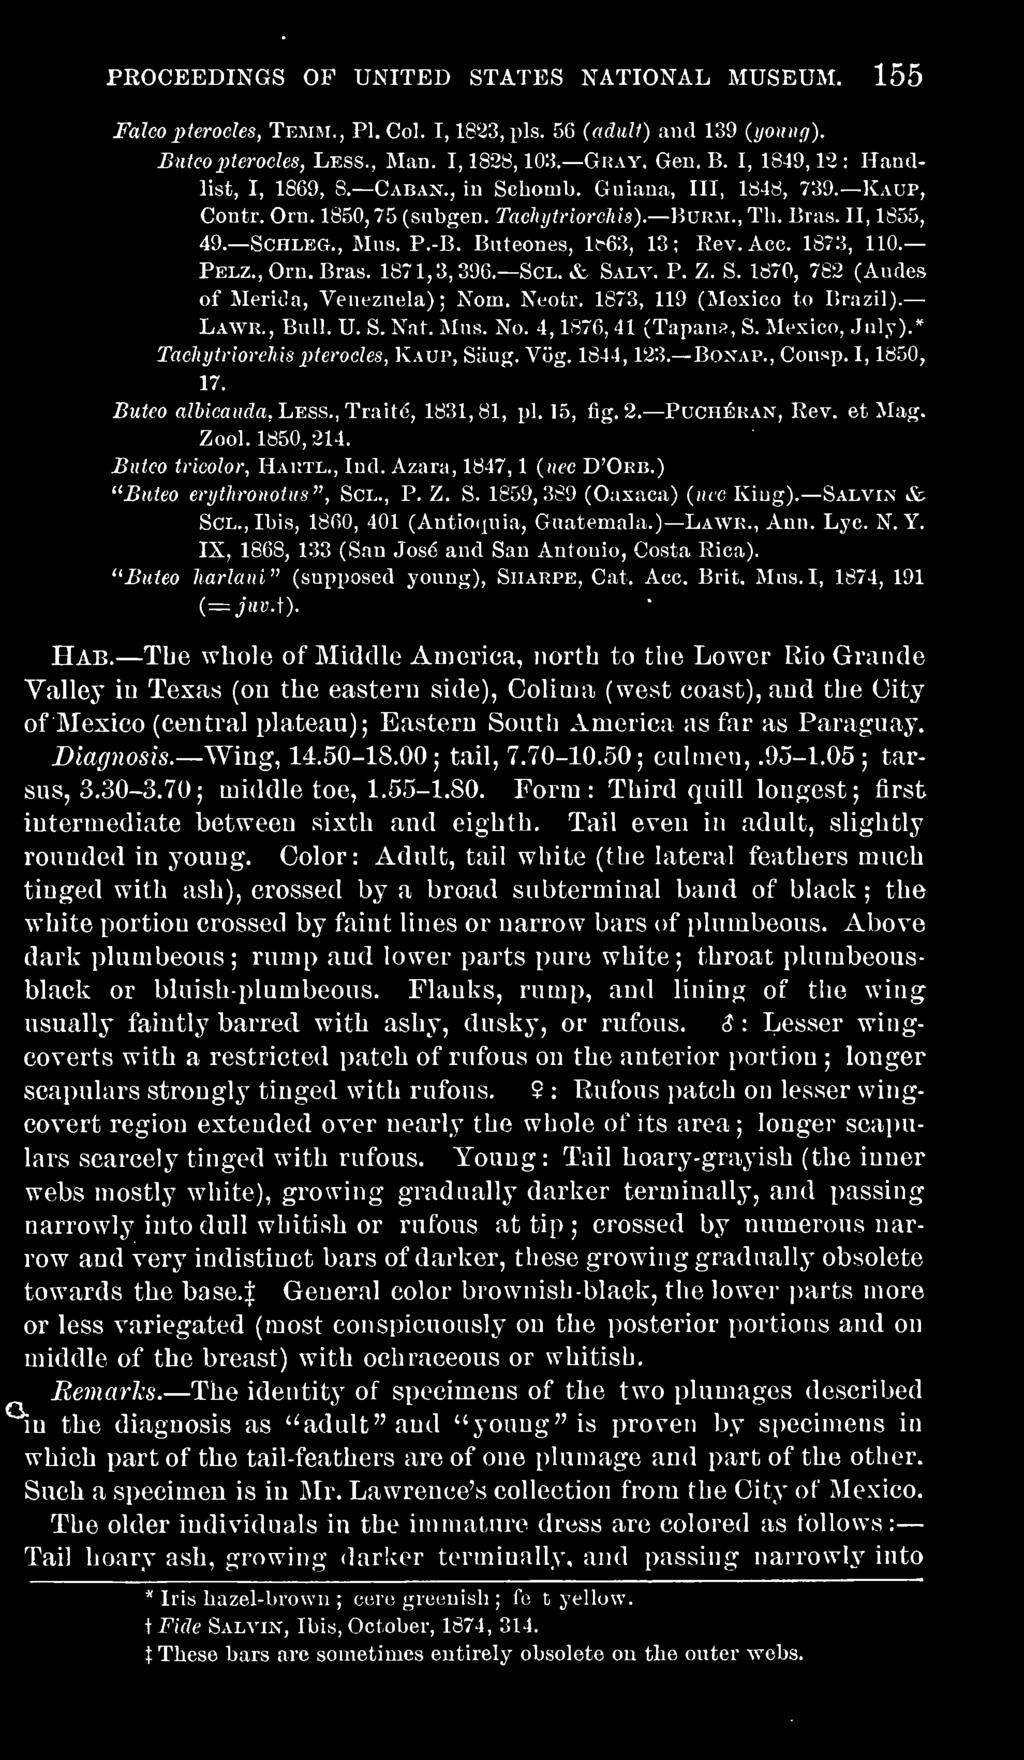 Butea tricolor, Hartl., Ind. Azara, 1847, 1 (nee D'Orb.) "Butea erythronotus", Scl., P. Z. S. 1859,389 (Oaxaca) (iicc Kiug). Salvin & Scl., Ibis, 1860, 401 (Antioqnia, Guatemala.) Lawr., Ann. Lye. N.